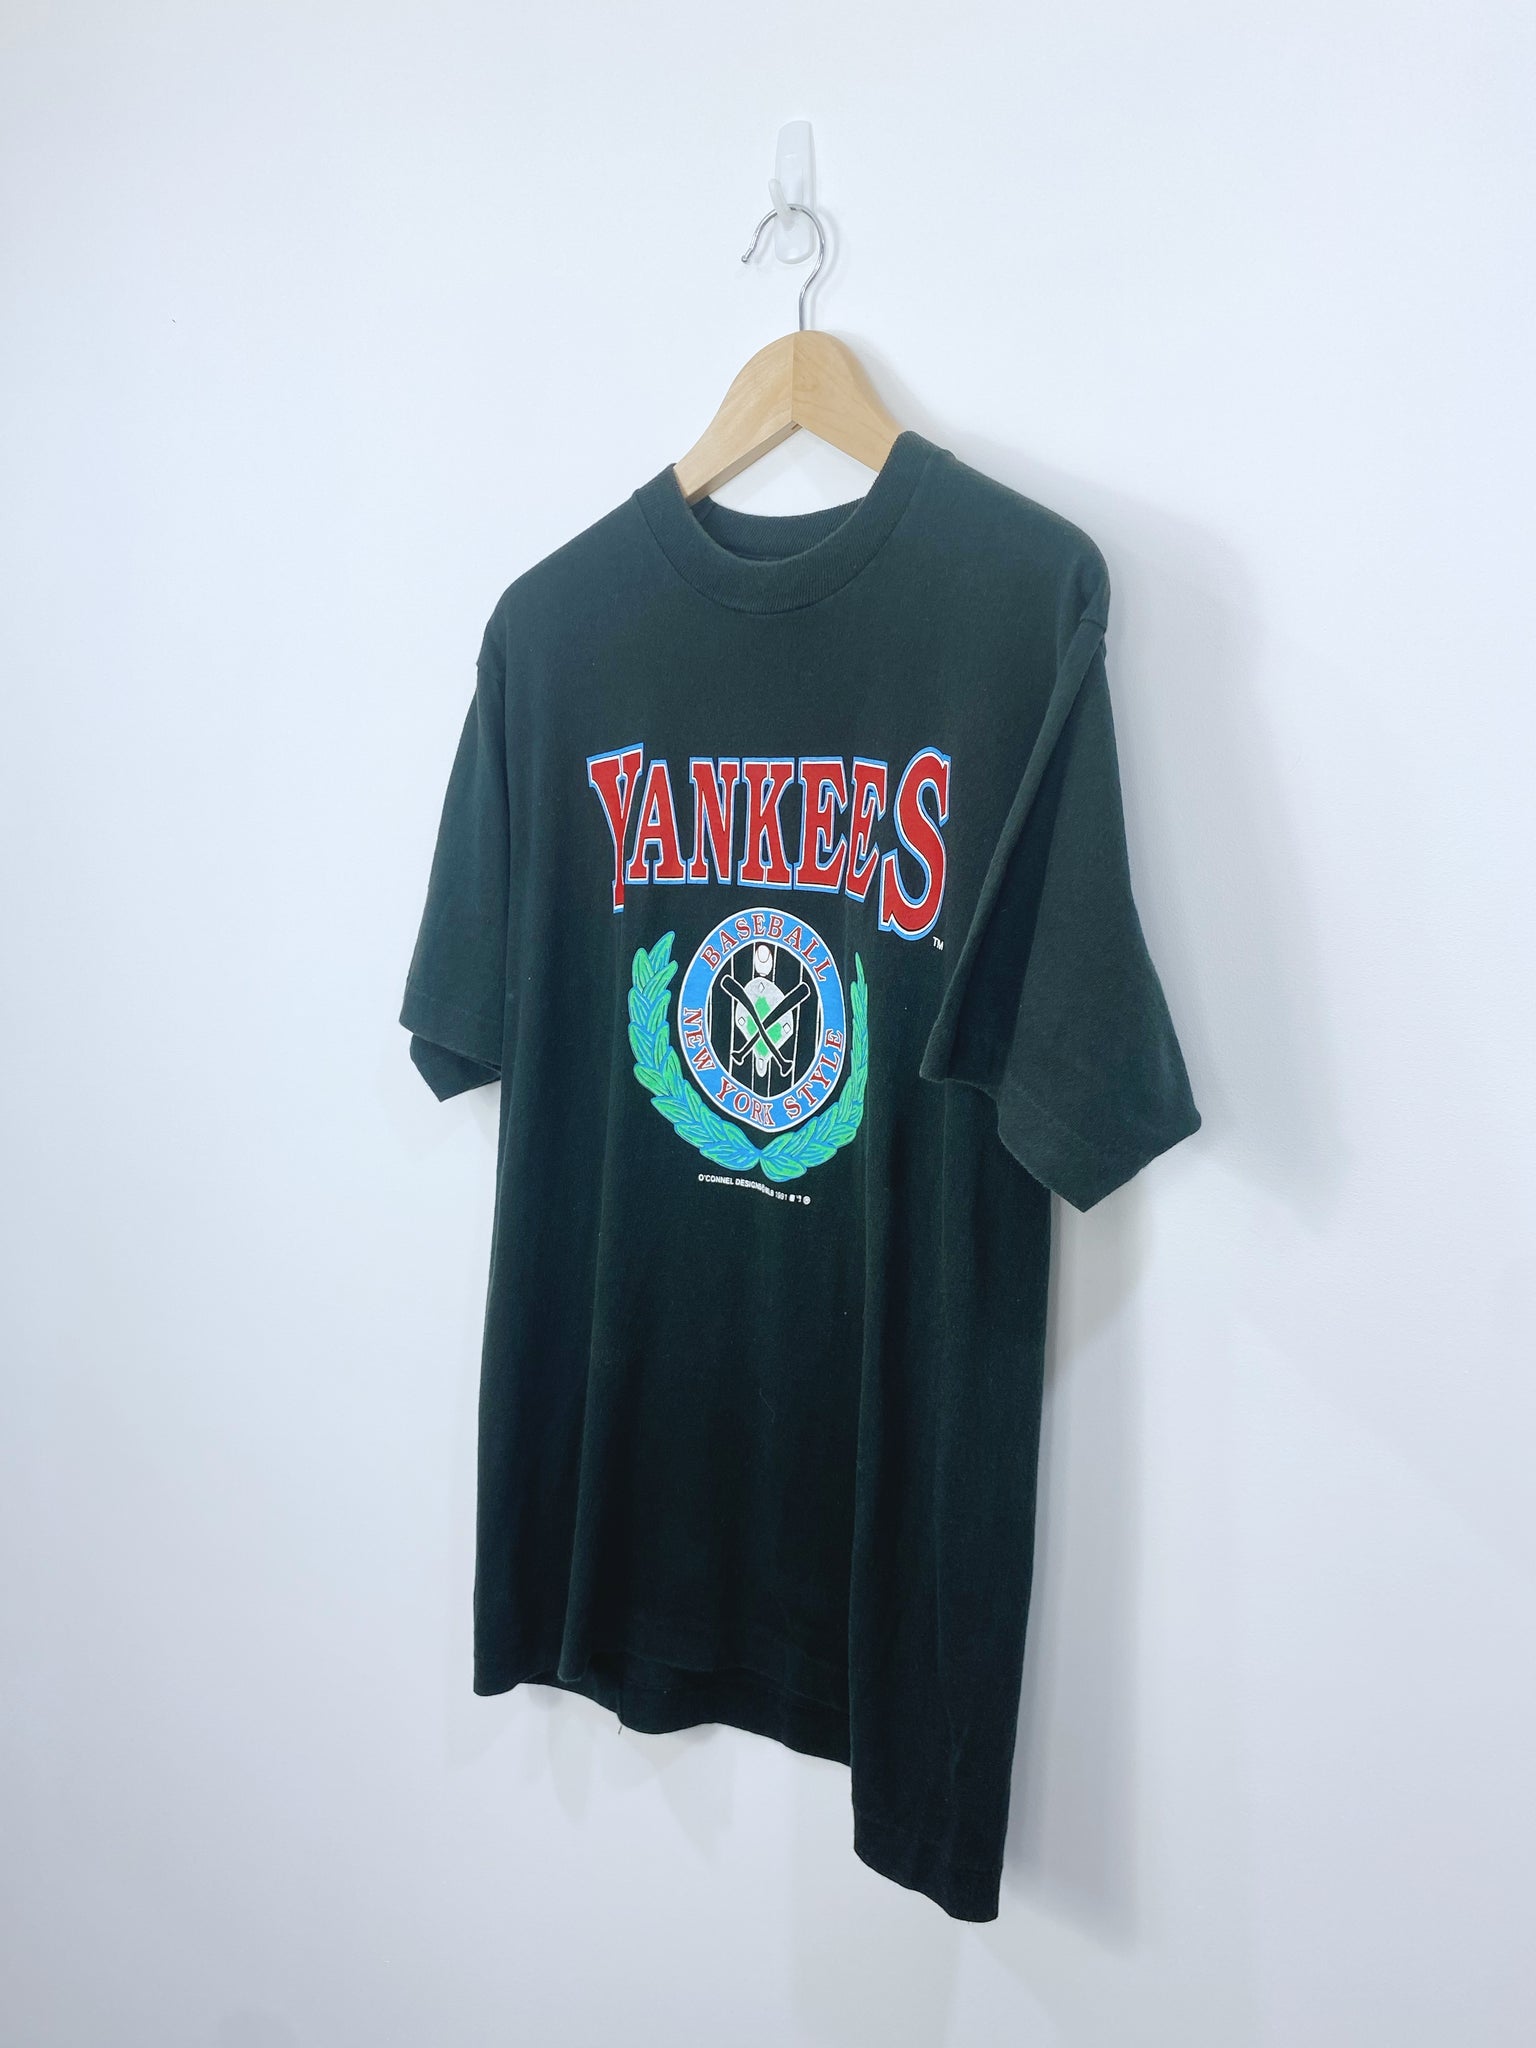 Vintage 1991 New York Yankees T-shirt L